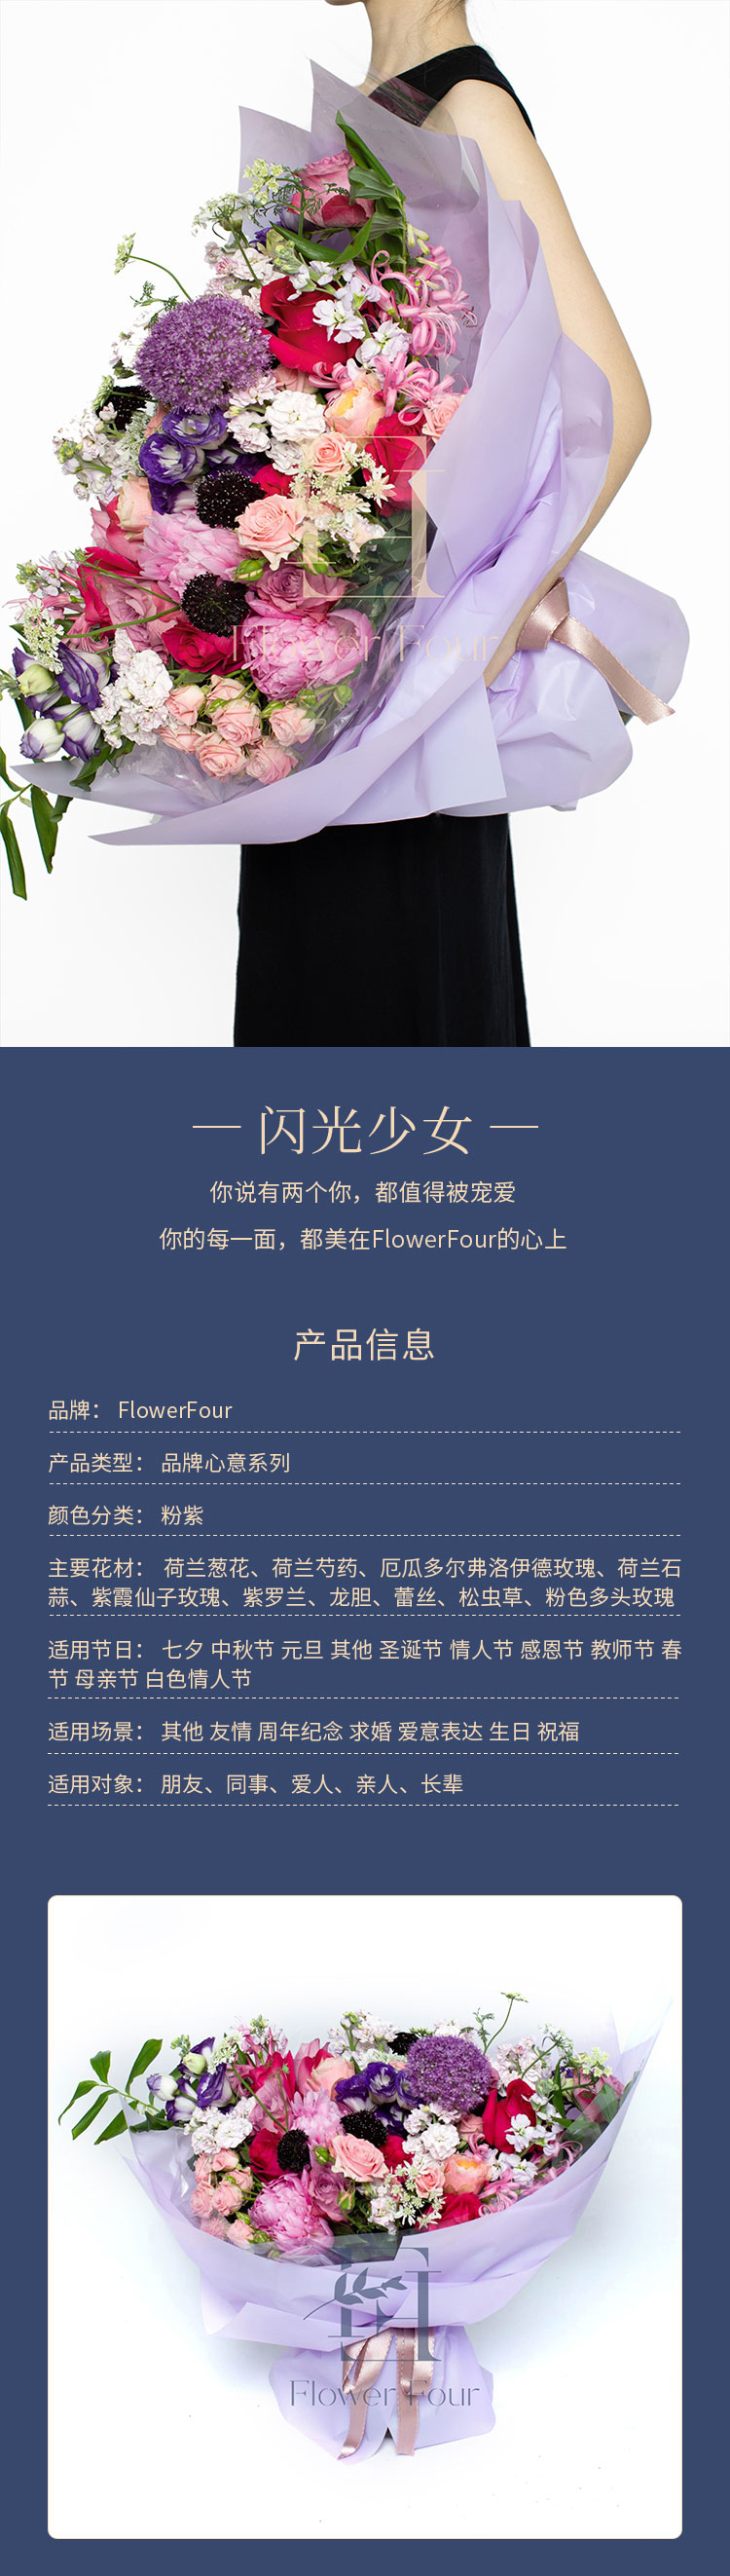 FlowerFour/FlowerFour  进口花材鲜花花束 闪光少女（FlowerFour心意款）生日纪念日节日花束【北京地区专享】